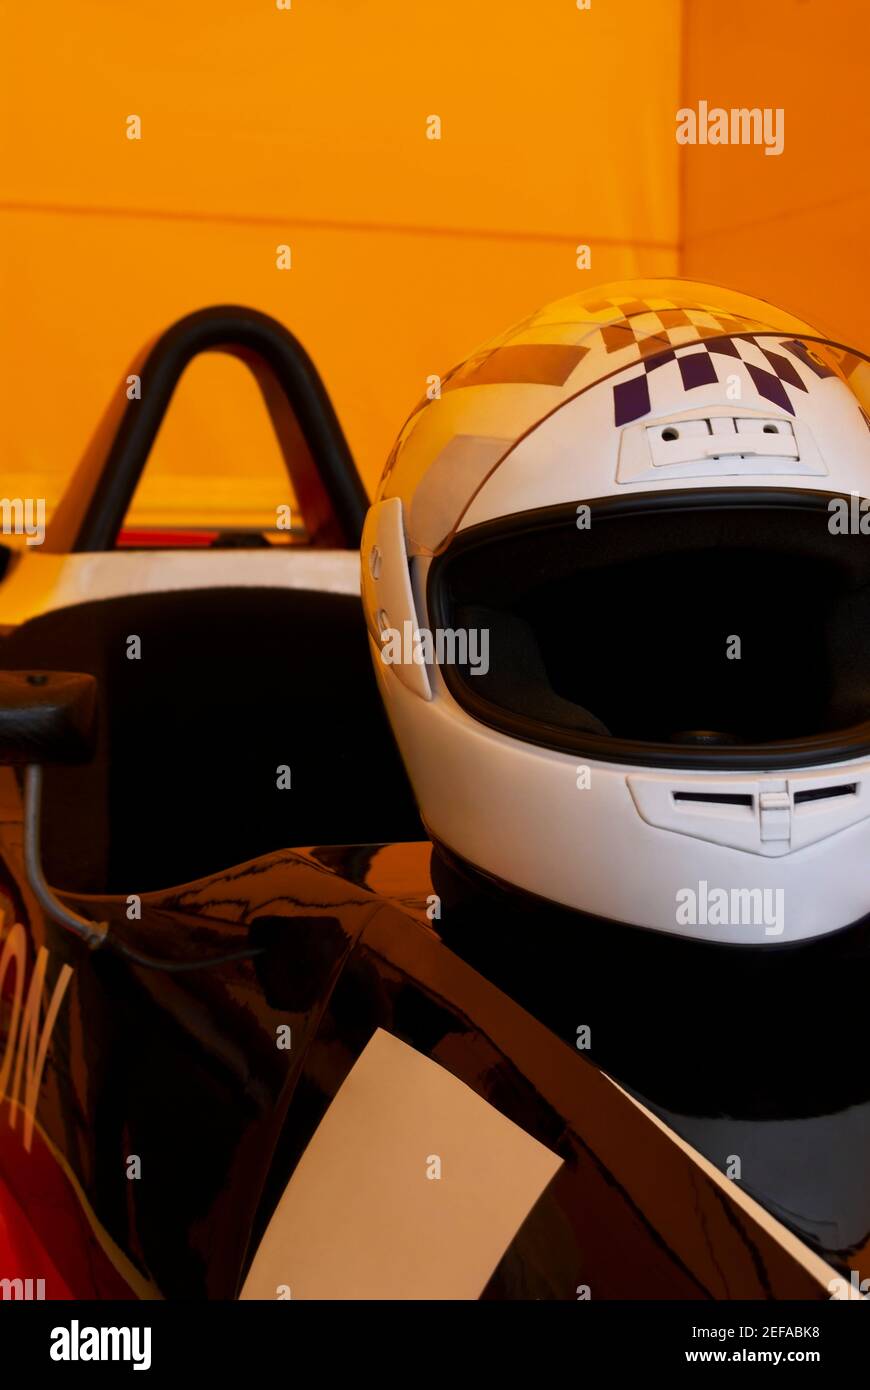 Close-up of a crash helmet on a racecar Stock Photo